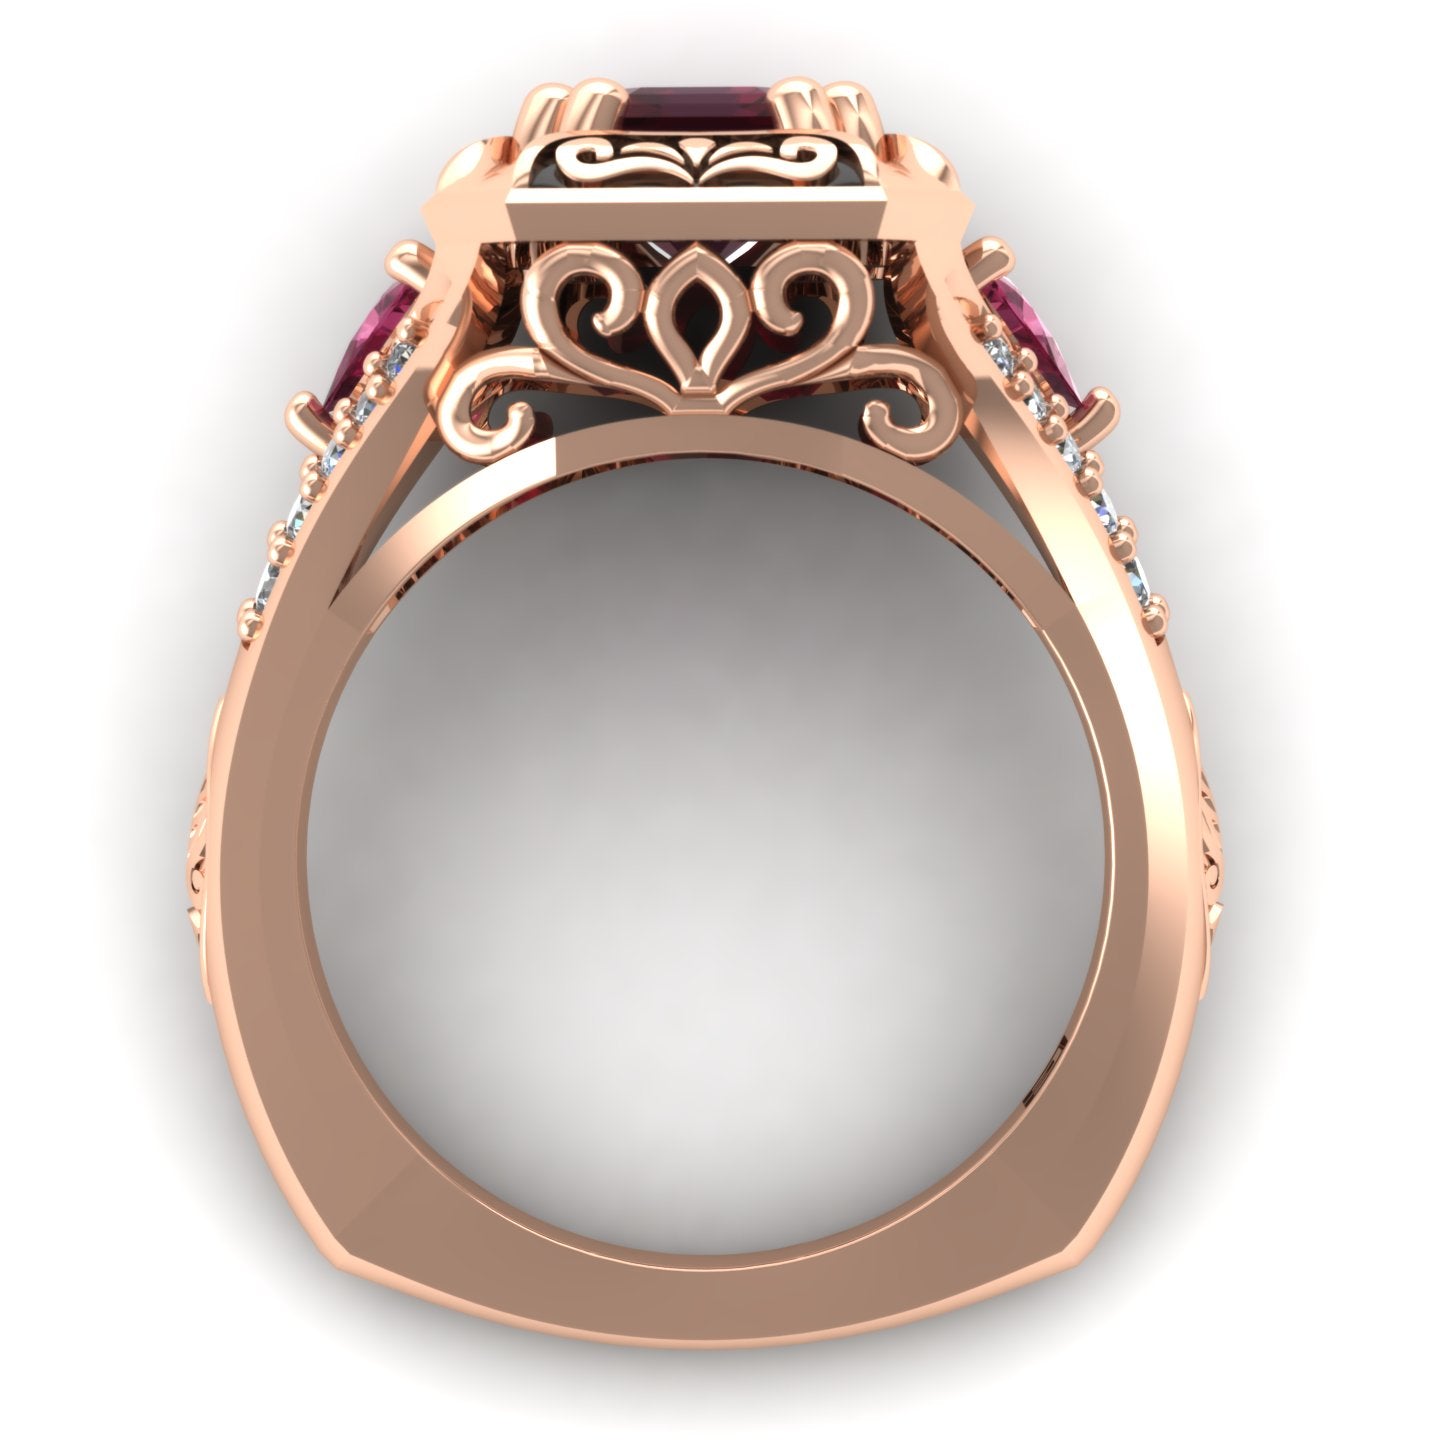 emerald cut rhodolite garnet trillion pink tourmaline and diamond split shank ring in 14k rose gold - Charles Babb Designs - through finger view